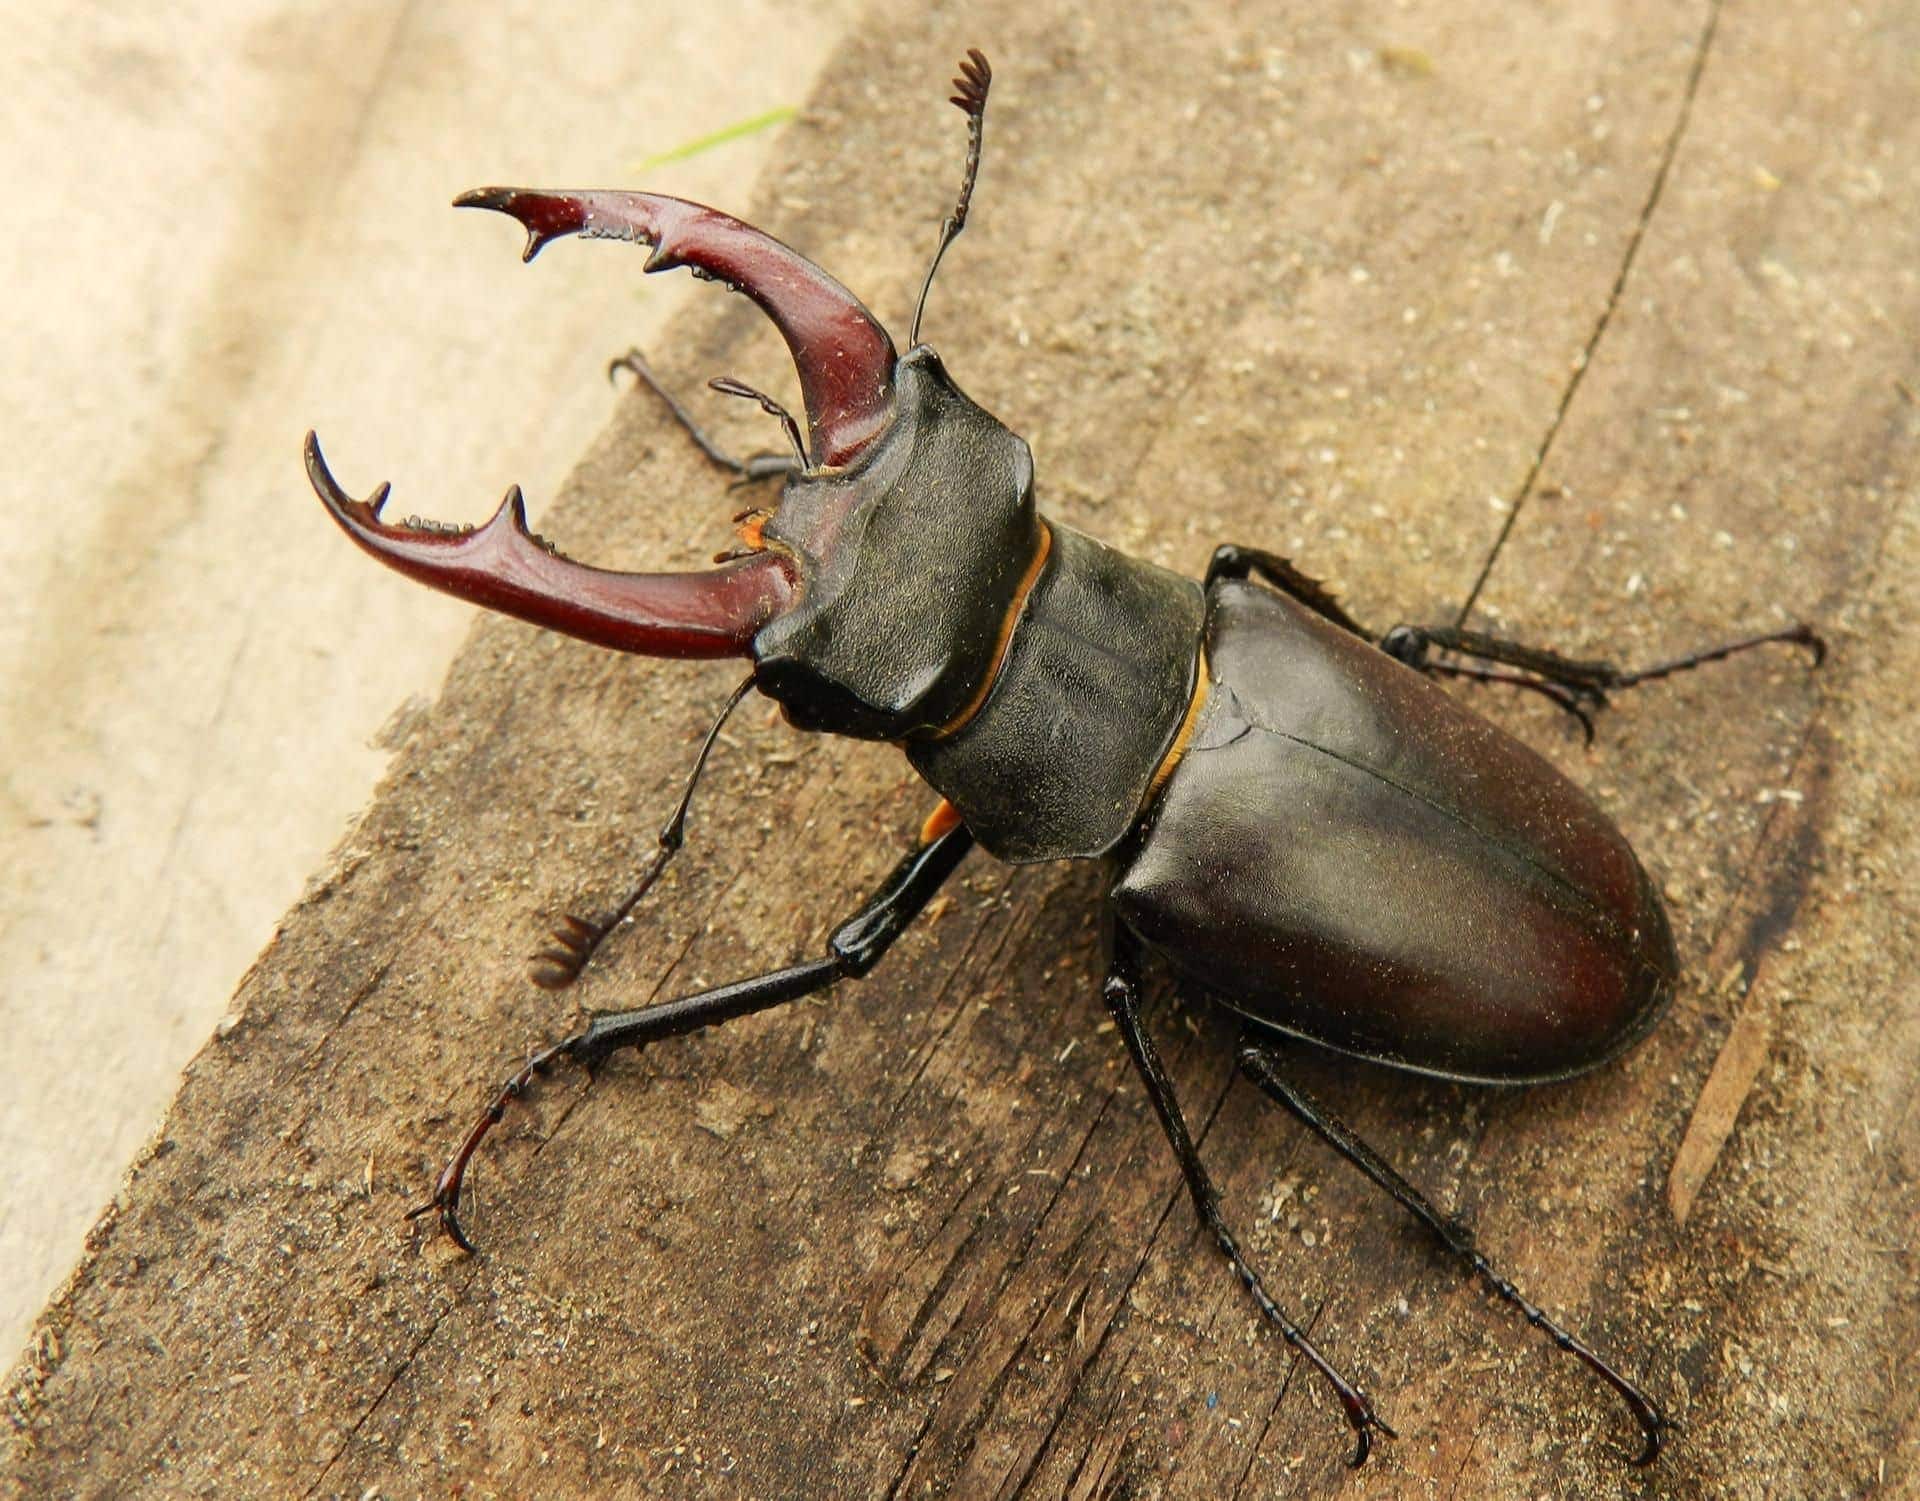 beetle dream meaning, dream about beetle, beetle dream interpretation, seeing in a dream beetle